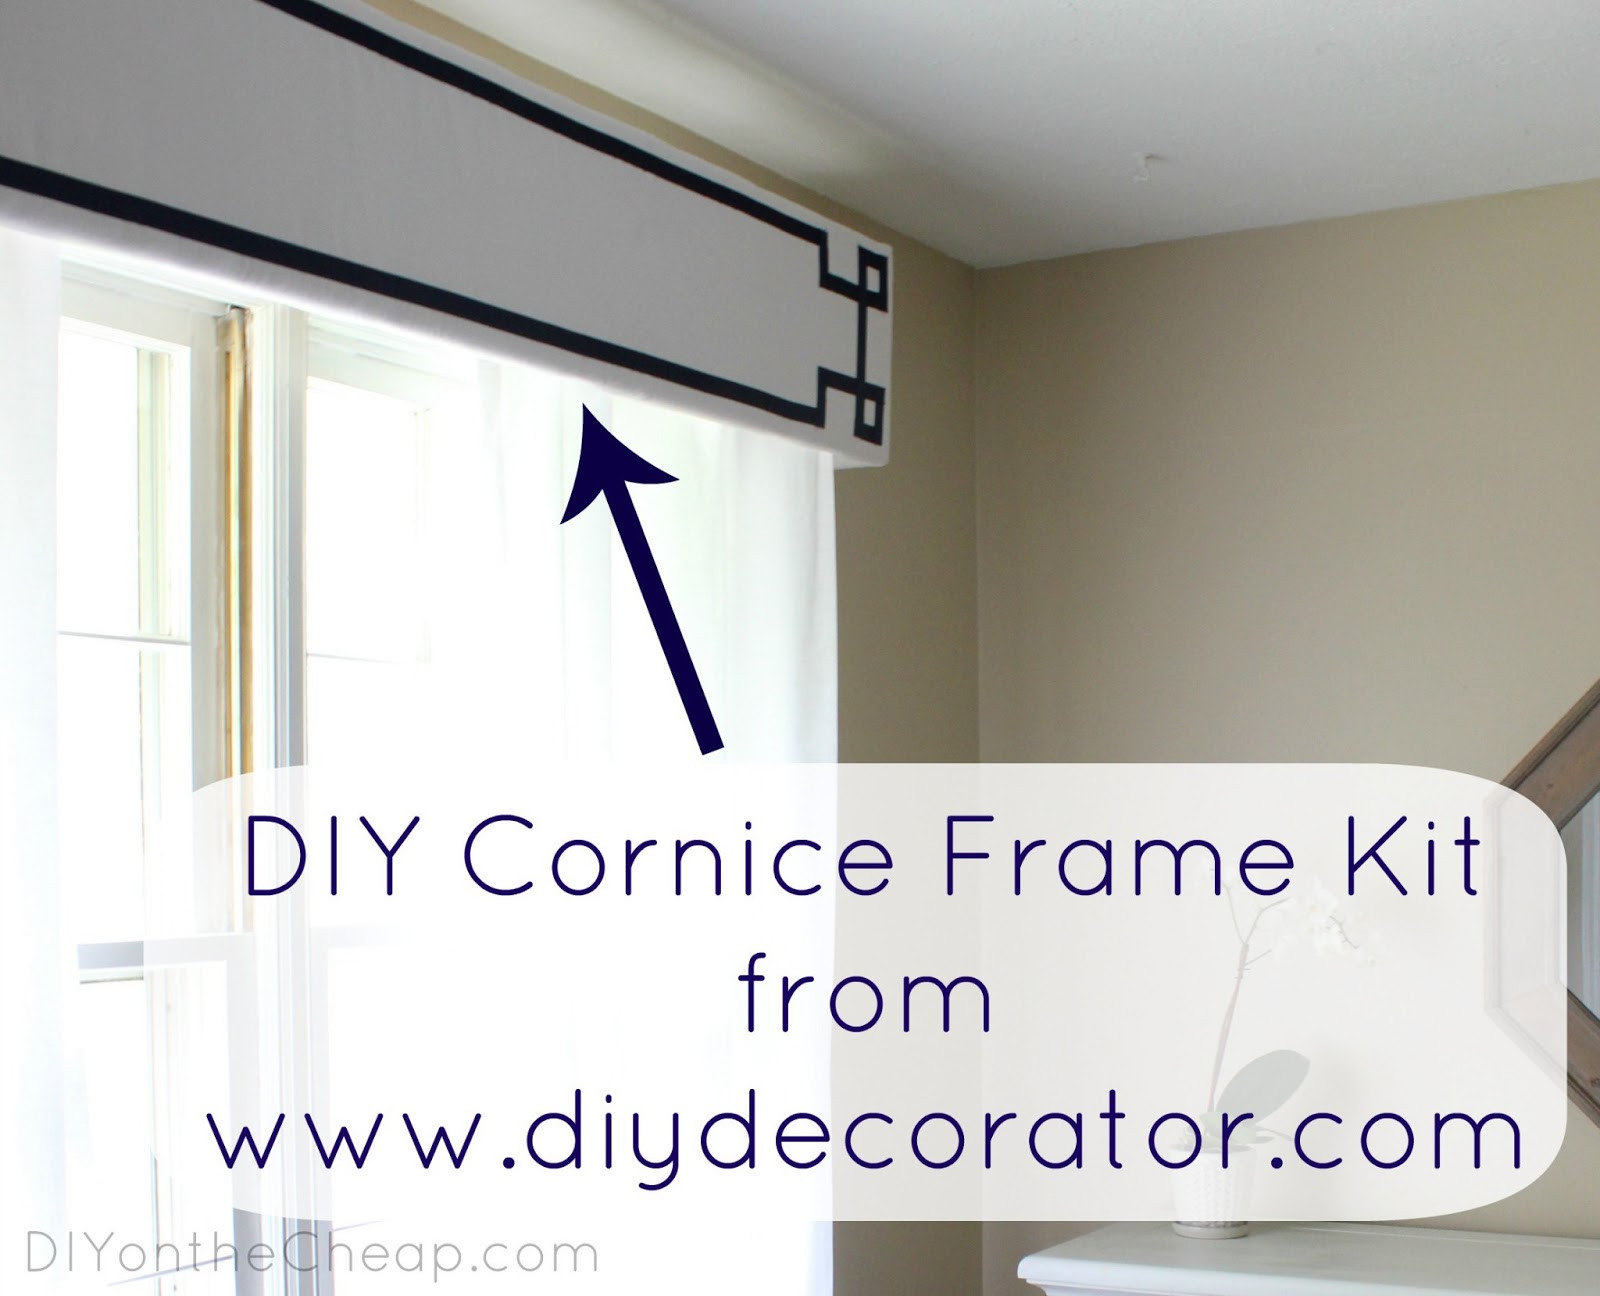 DIY Cornice Kit
 New Window Treatments DIY Cornice Frame Kit Review